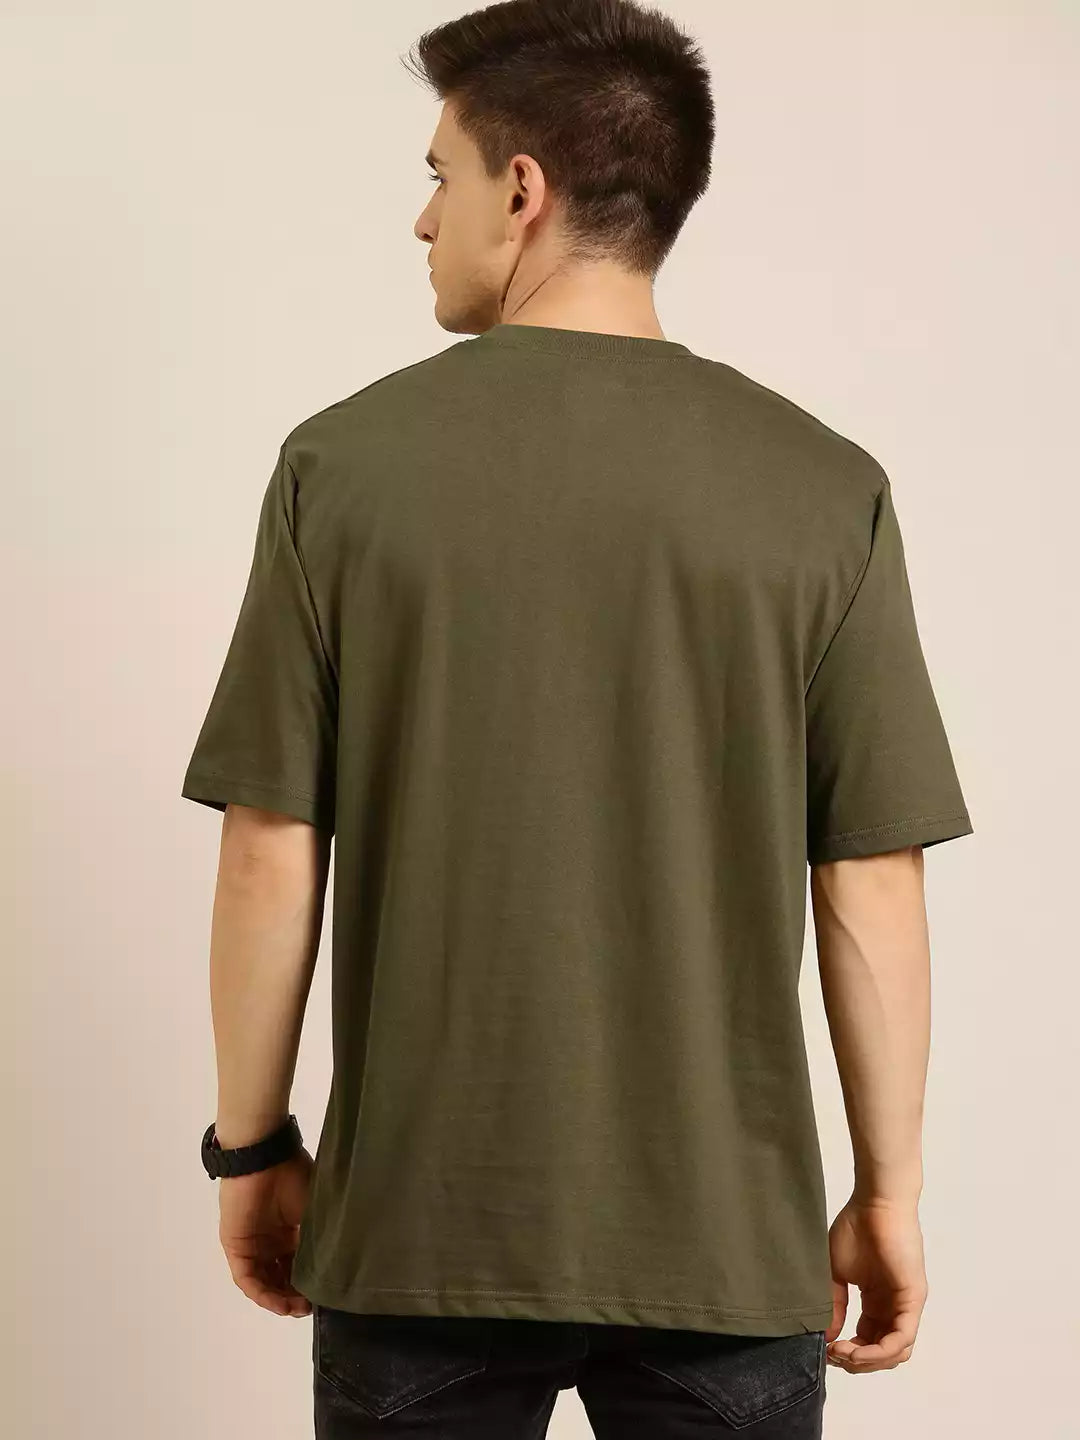 Olive Green Color Men's Cotton T-Shirt Plain Half Sleeve Round Neck